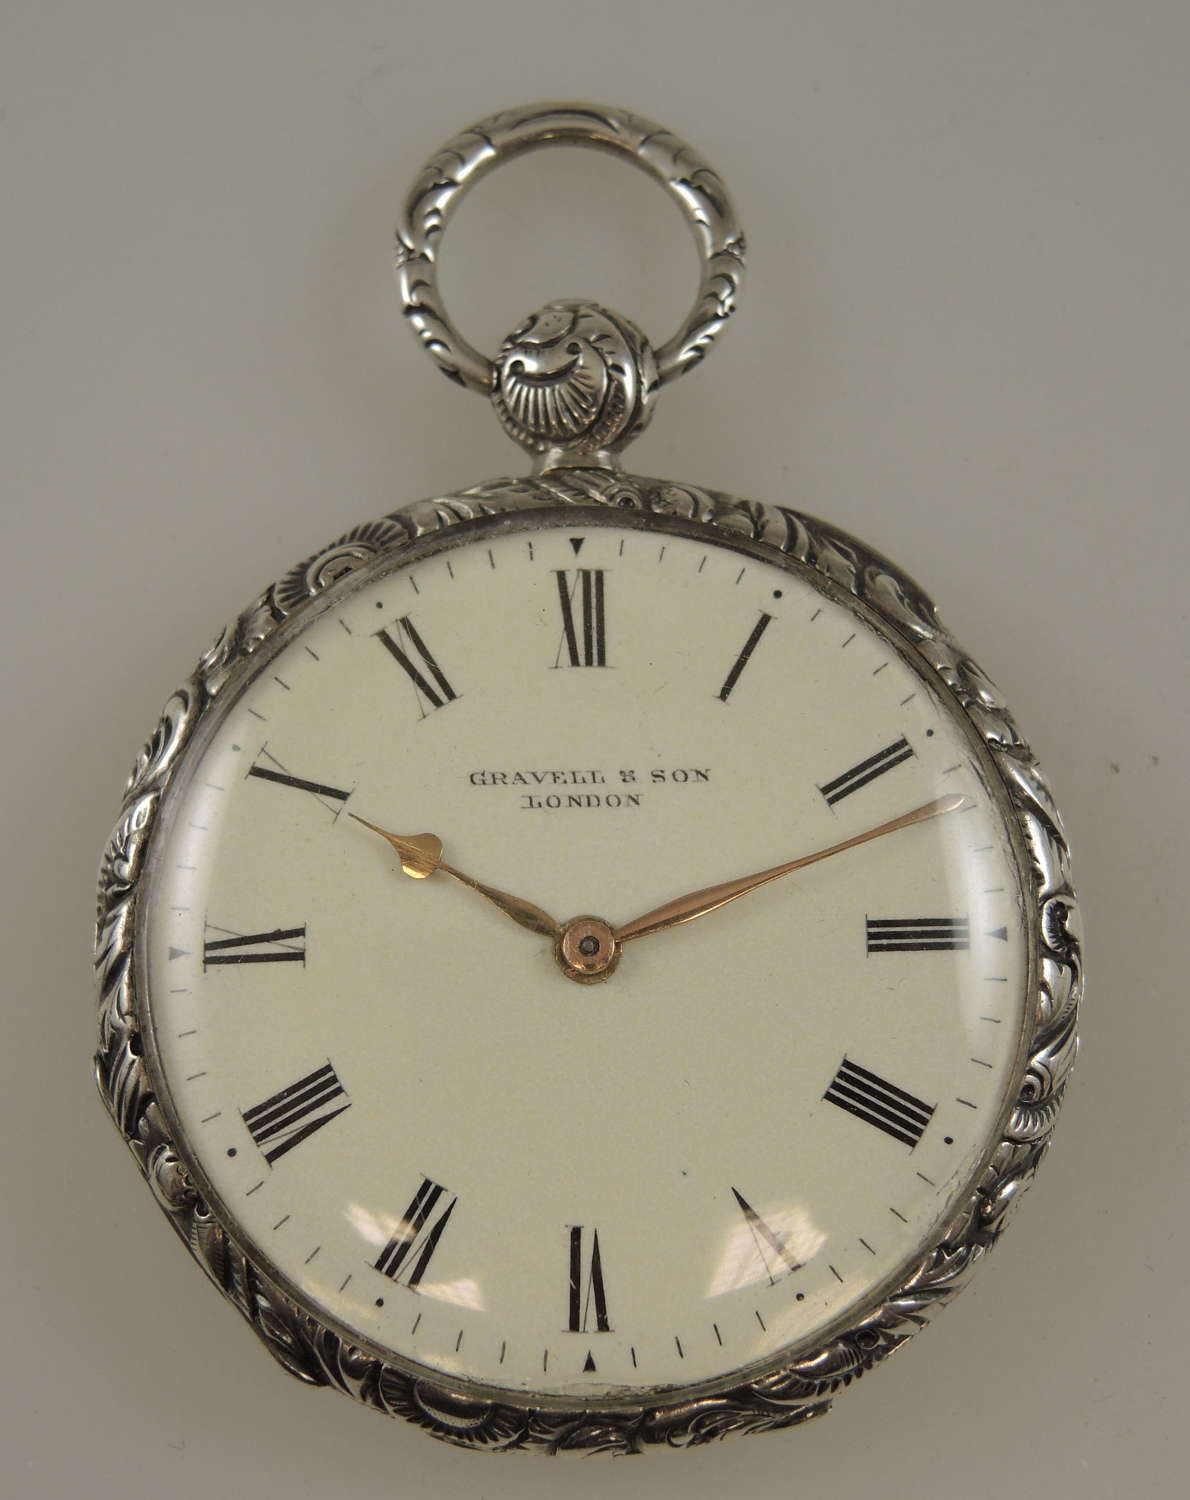 Georgian fine silver cylinder pocket watch. Gravell & Son London c1835